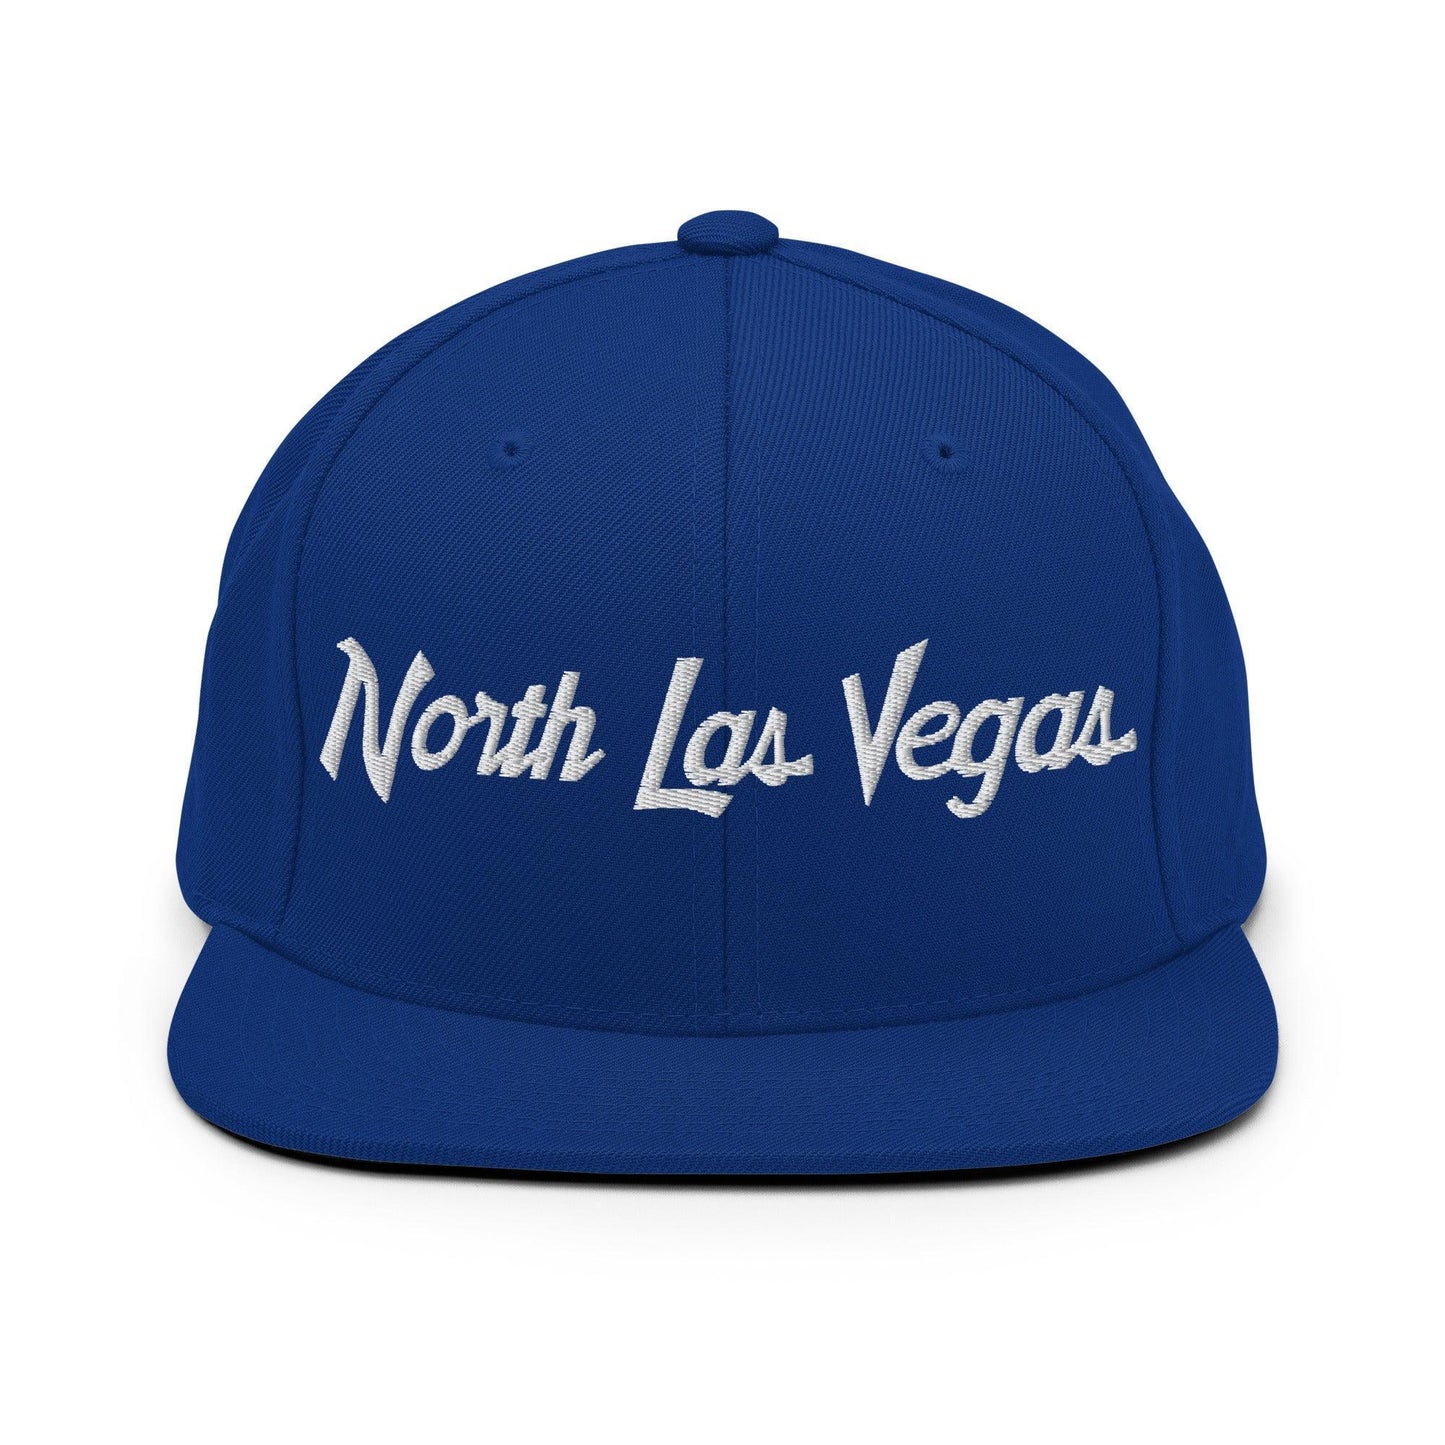 North Las Vegas Script Snapback Hat Royal Blue